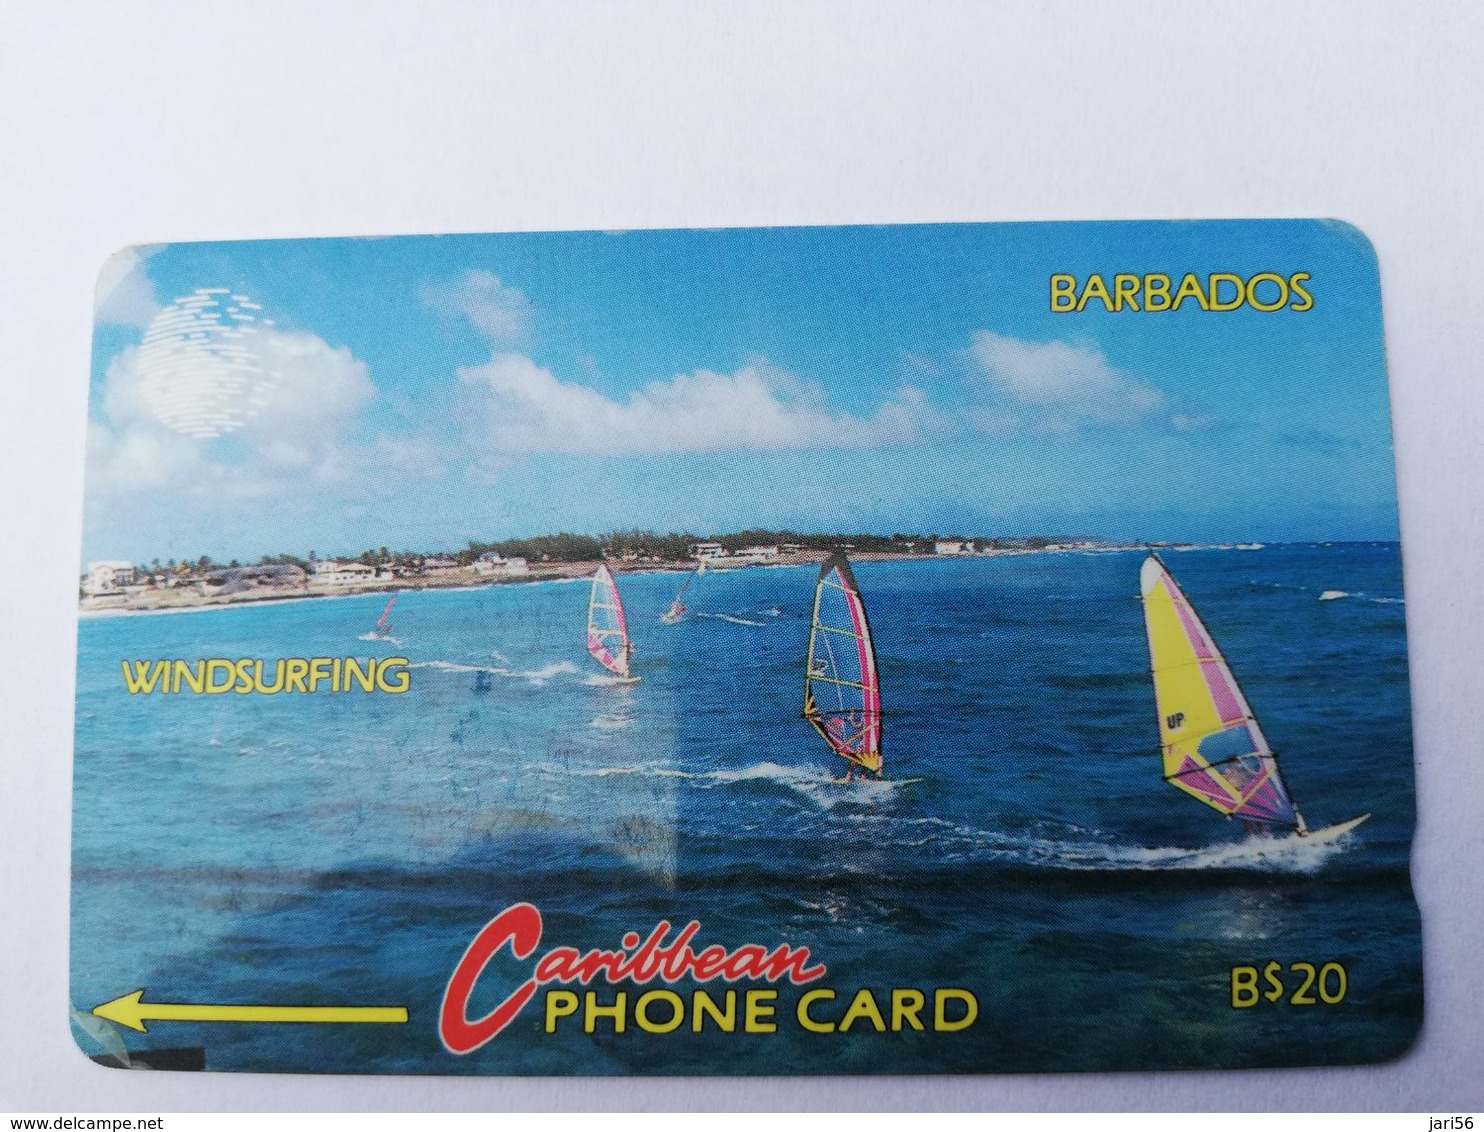 BARBADOS   $20-  Gpt Magnetic     BAR-10B  10CBDB   WINDSURFING     NEW  LOGO         Very Fine Used  Card  ** 2879** - Barbades